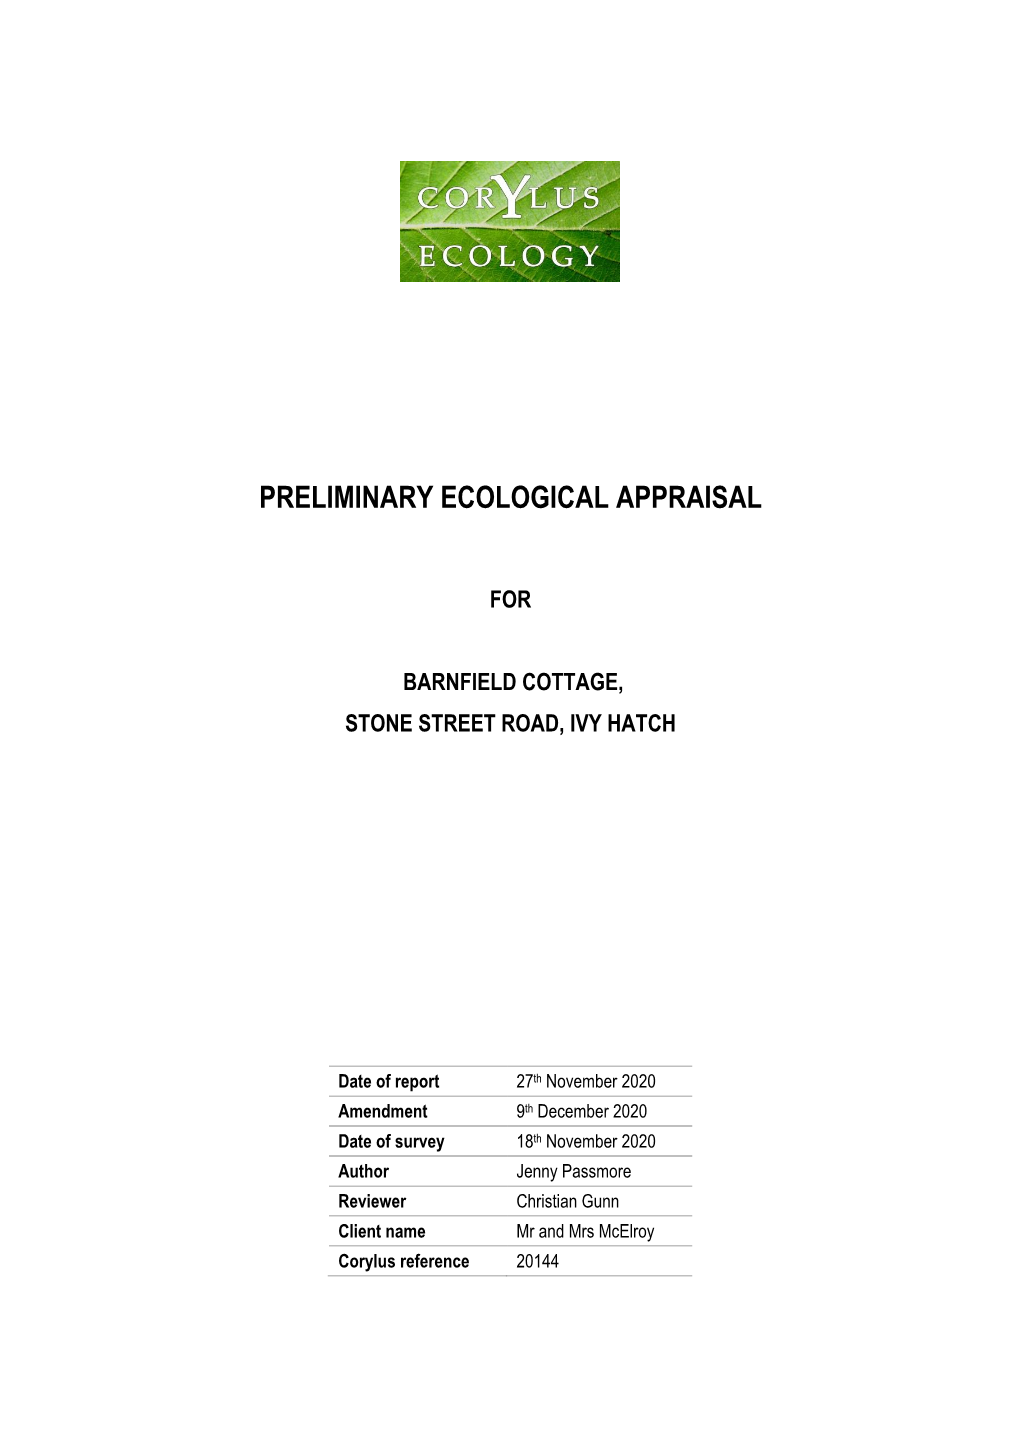 Preliminary Ecological Appraisal